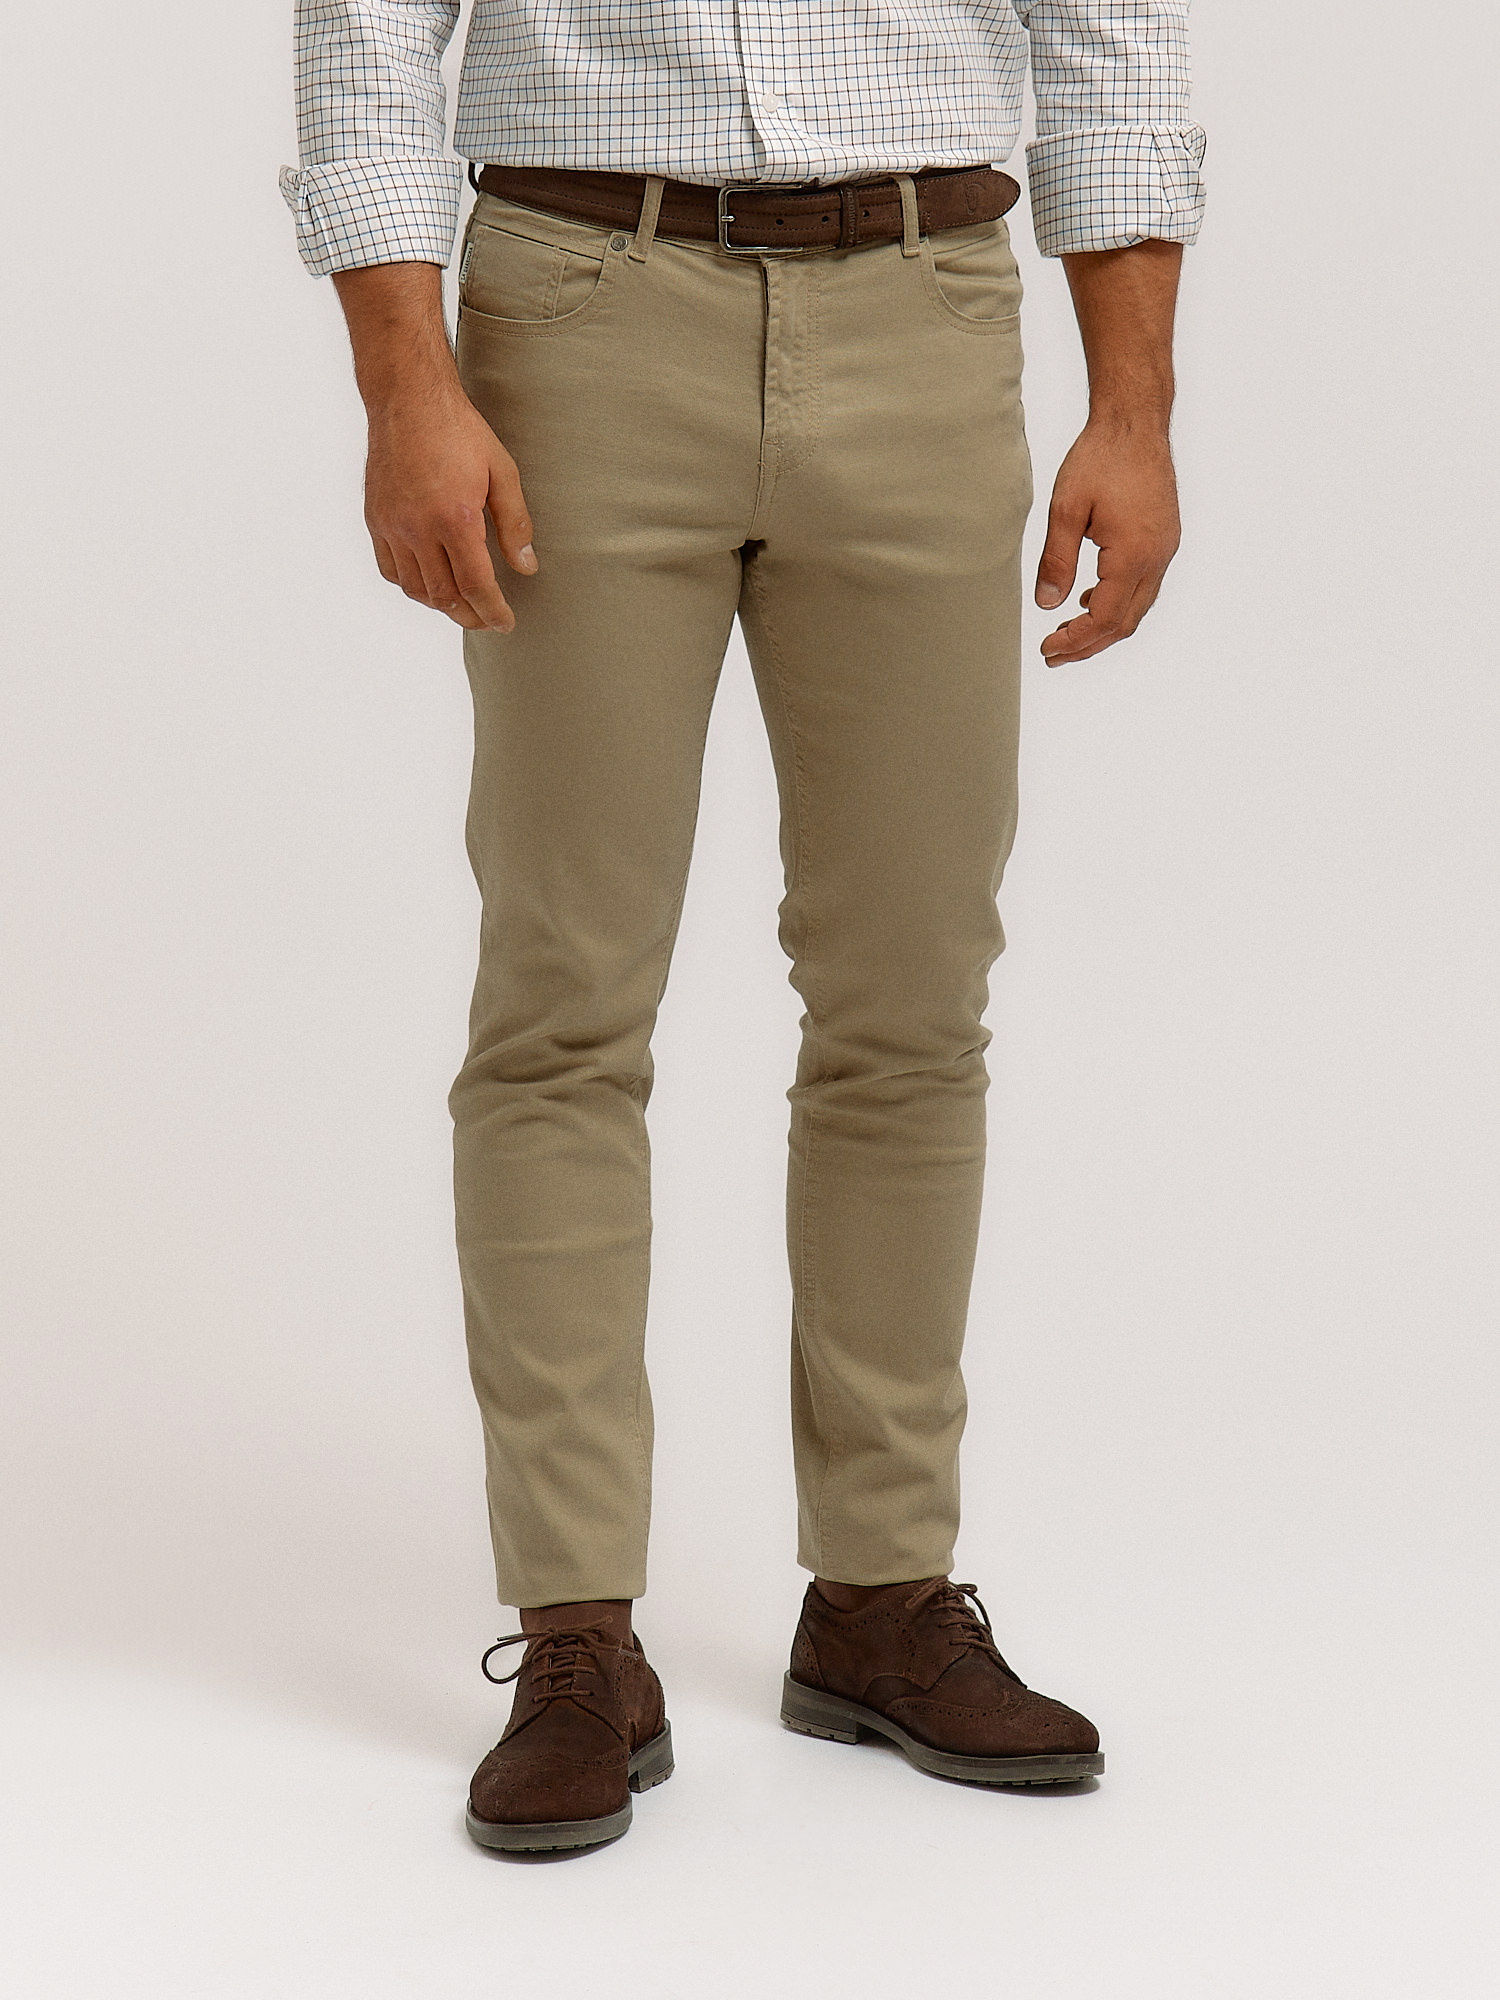 Men's Chinos - Fursac: Clothing & Trousers for Men